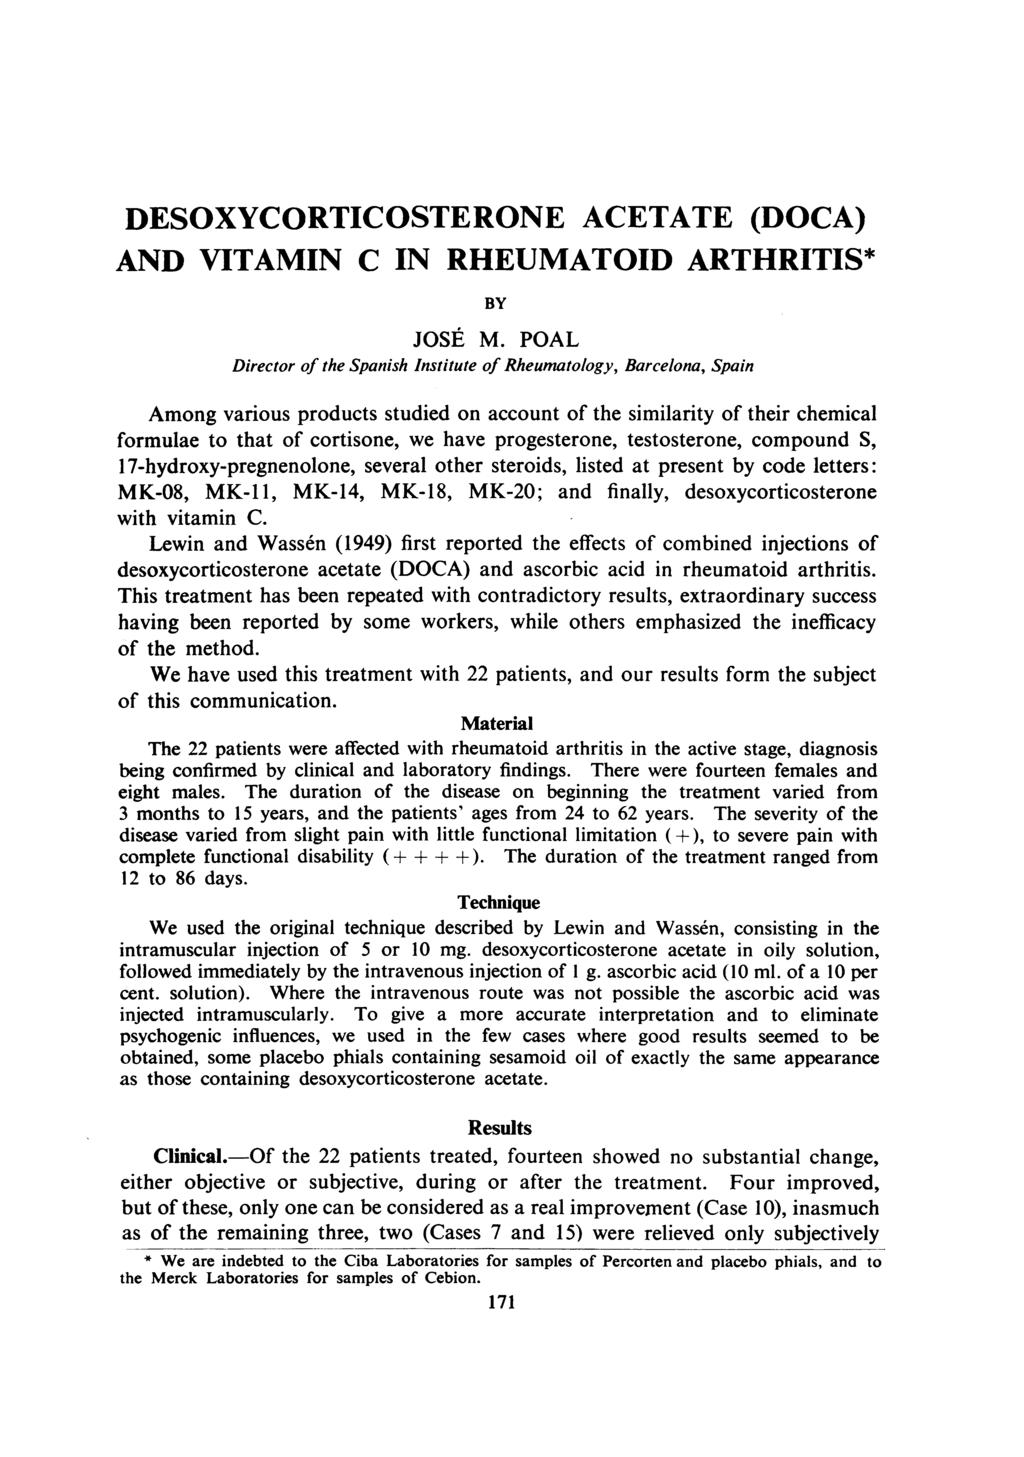 DESOXYCORTICOSTERONE ACETATE (DOCA) AND VITAMIN C IN RHEUMATOID ARTHRITIS* BY JOSE M.